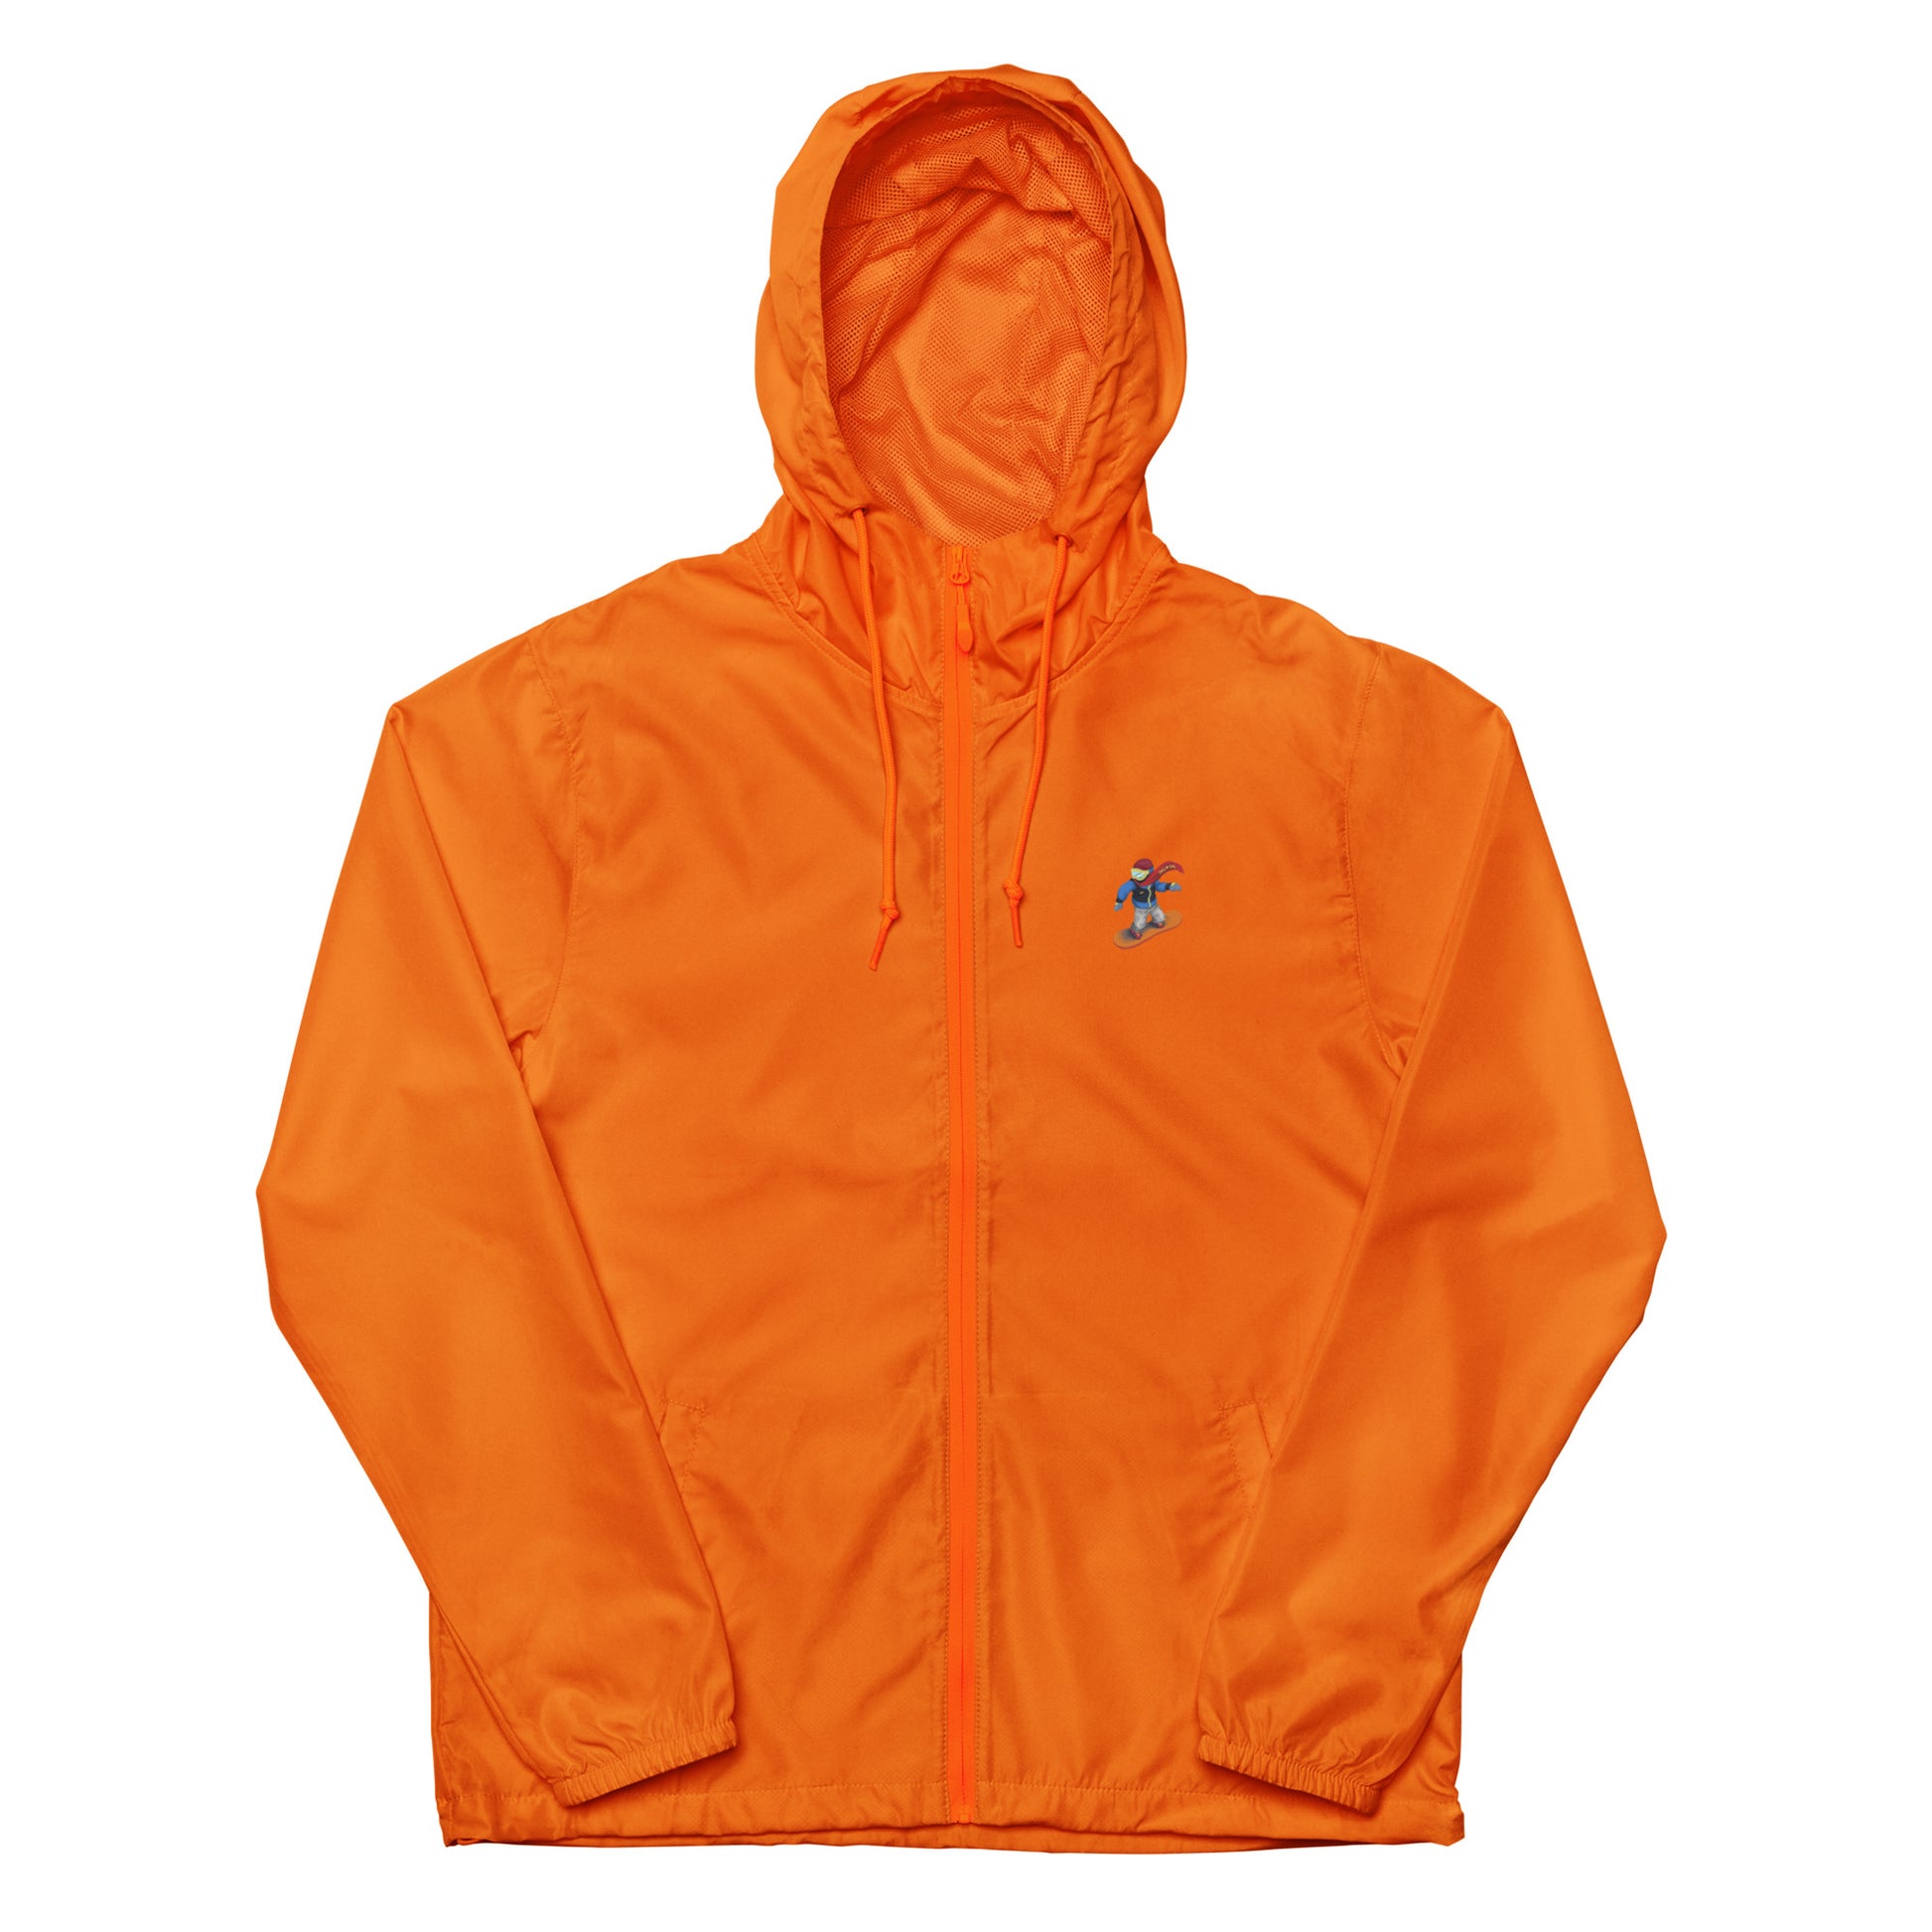 orange snowboard emoji hoodie with zipper